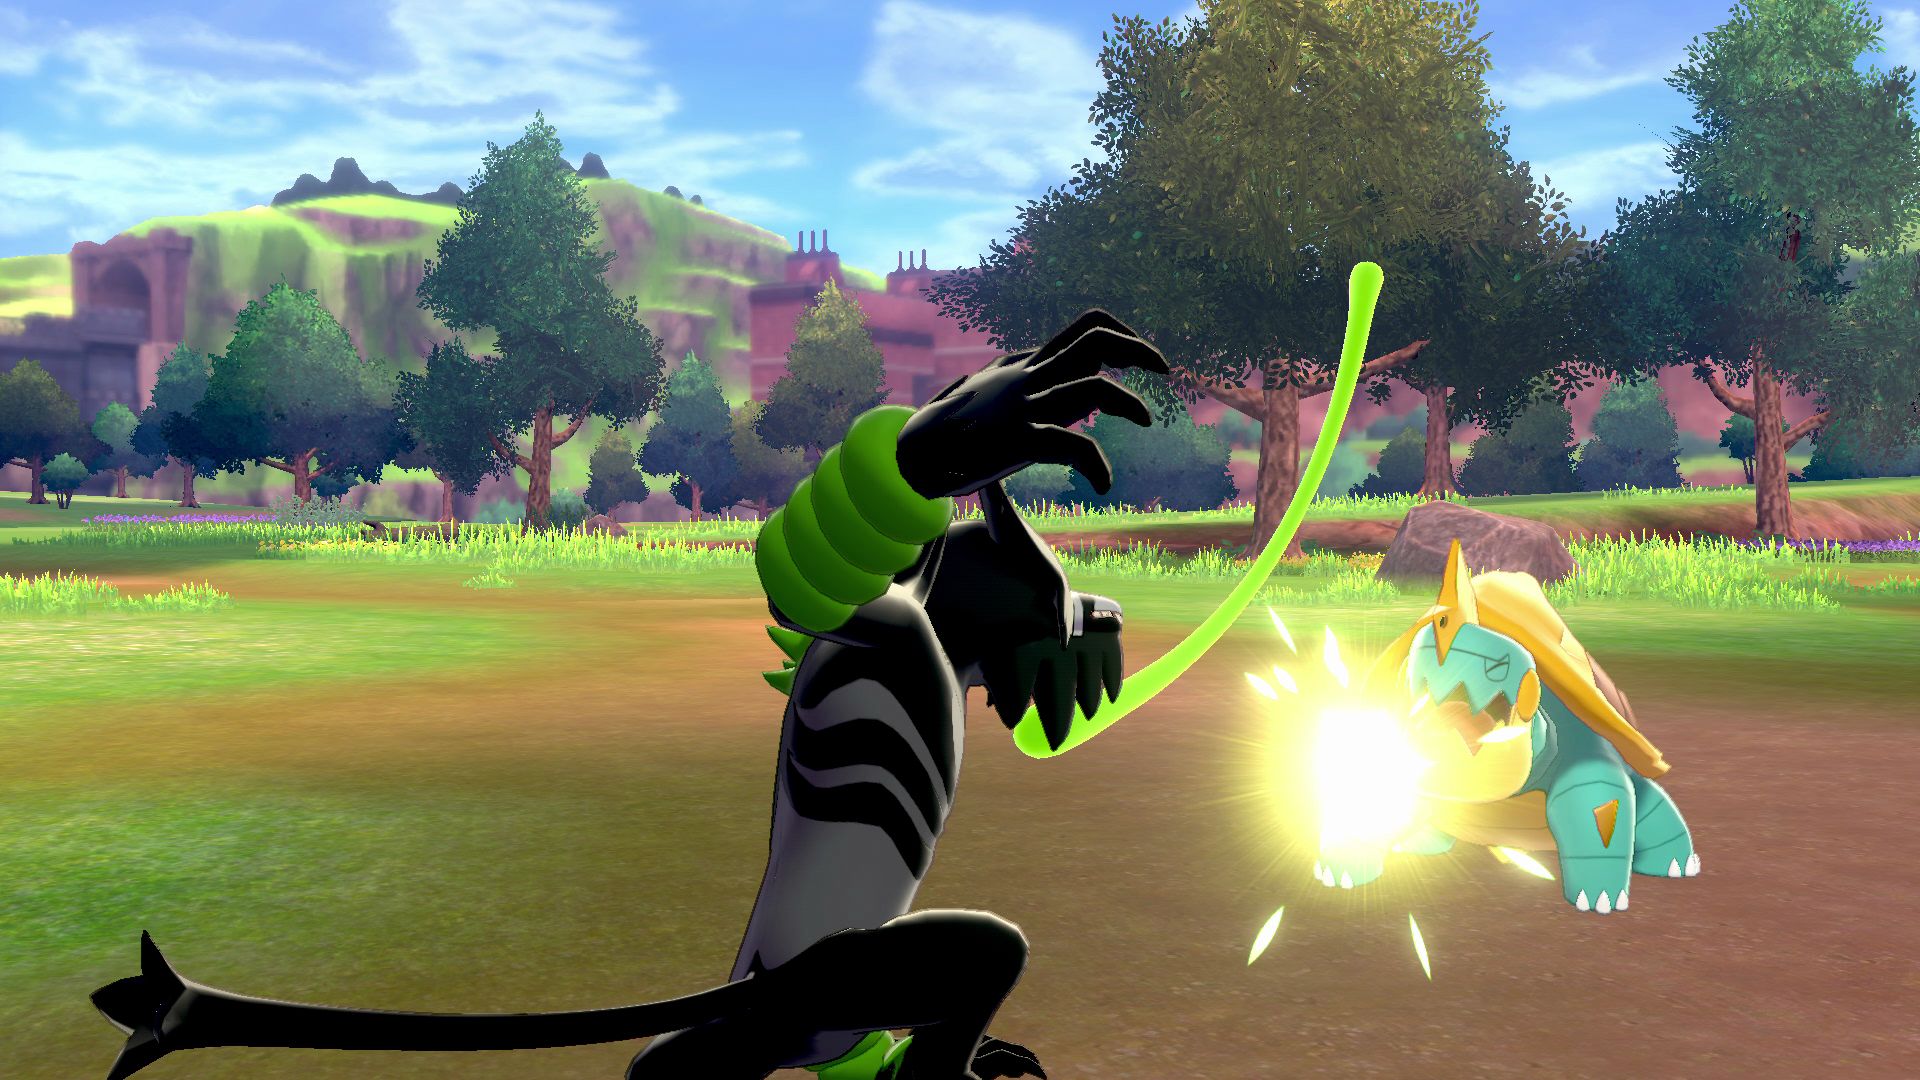 New mythical Pokémon Zarude revealed for Pokémon Sword and Shield - EGM